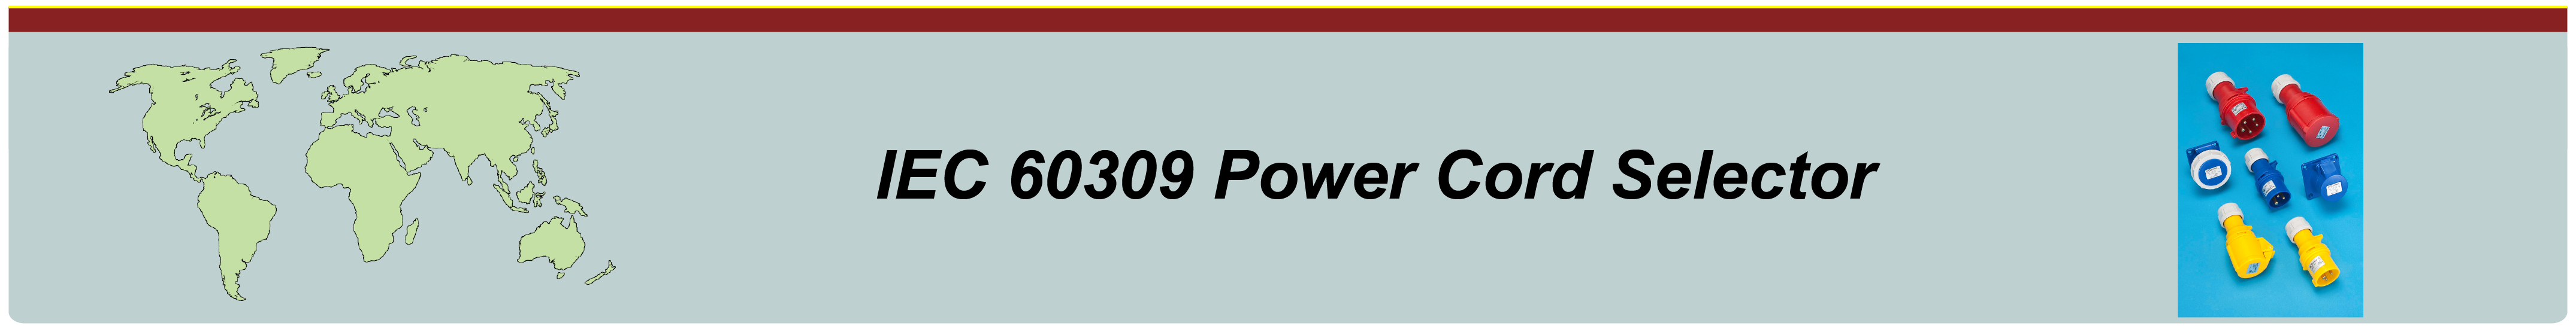 IEC 60309 Power Cord Selector